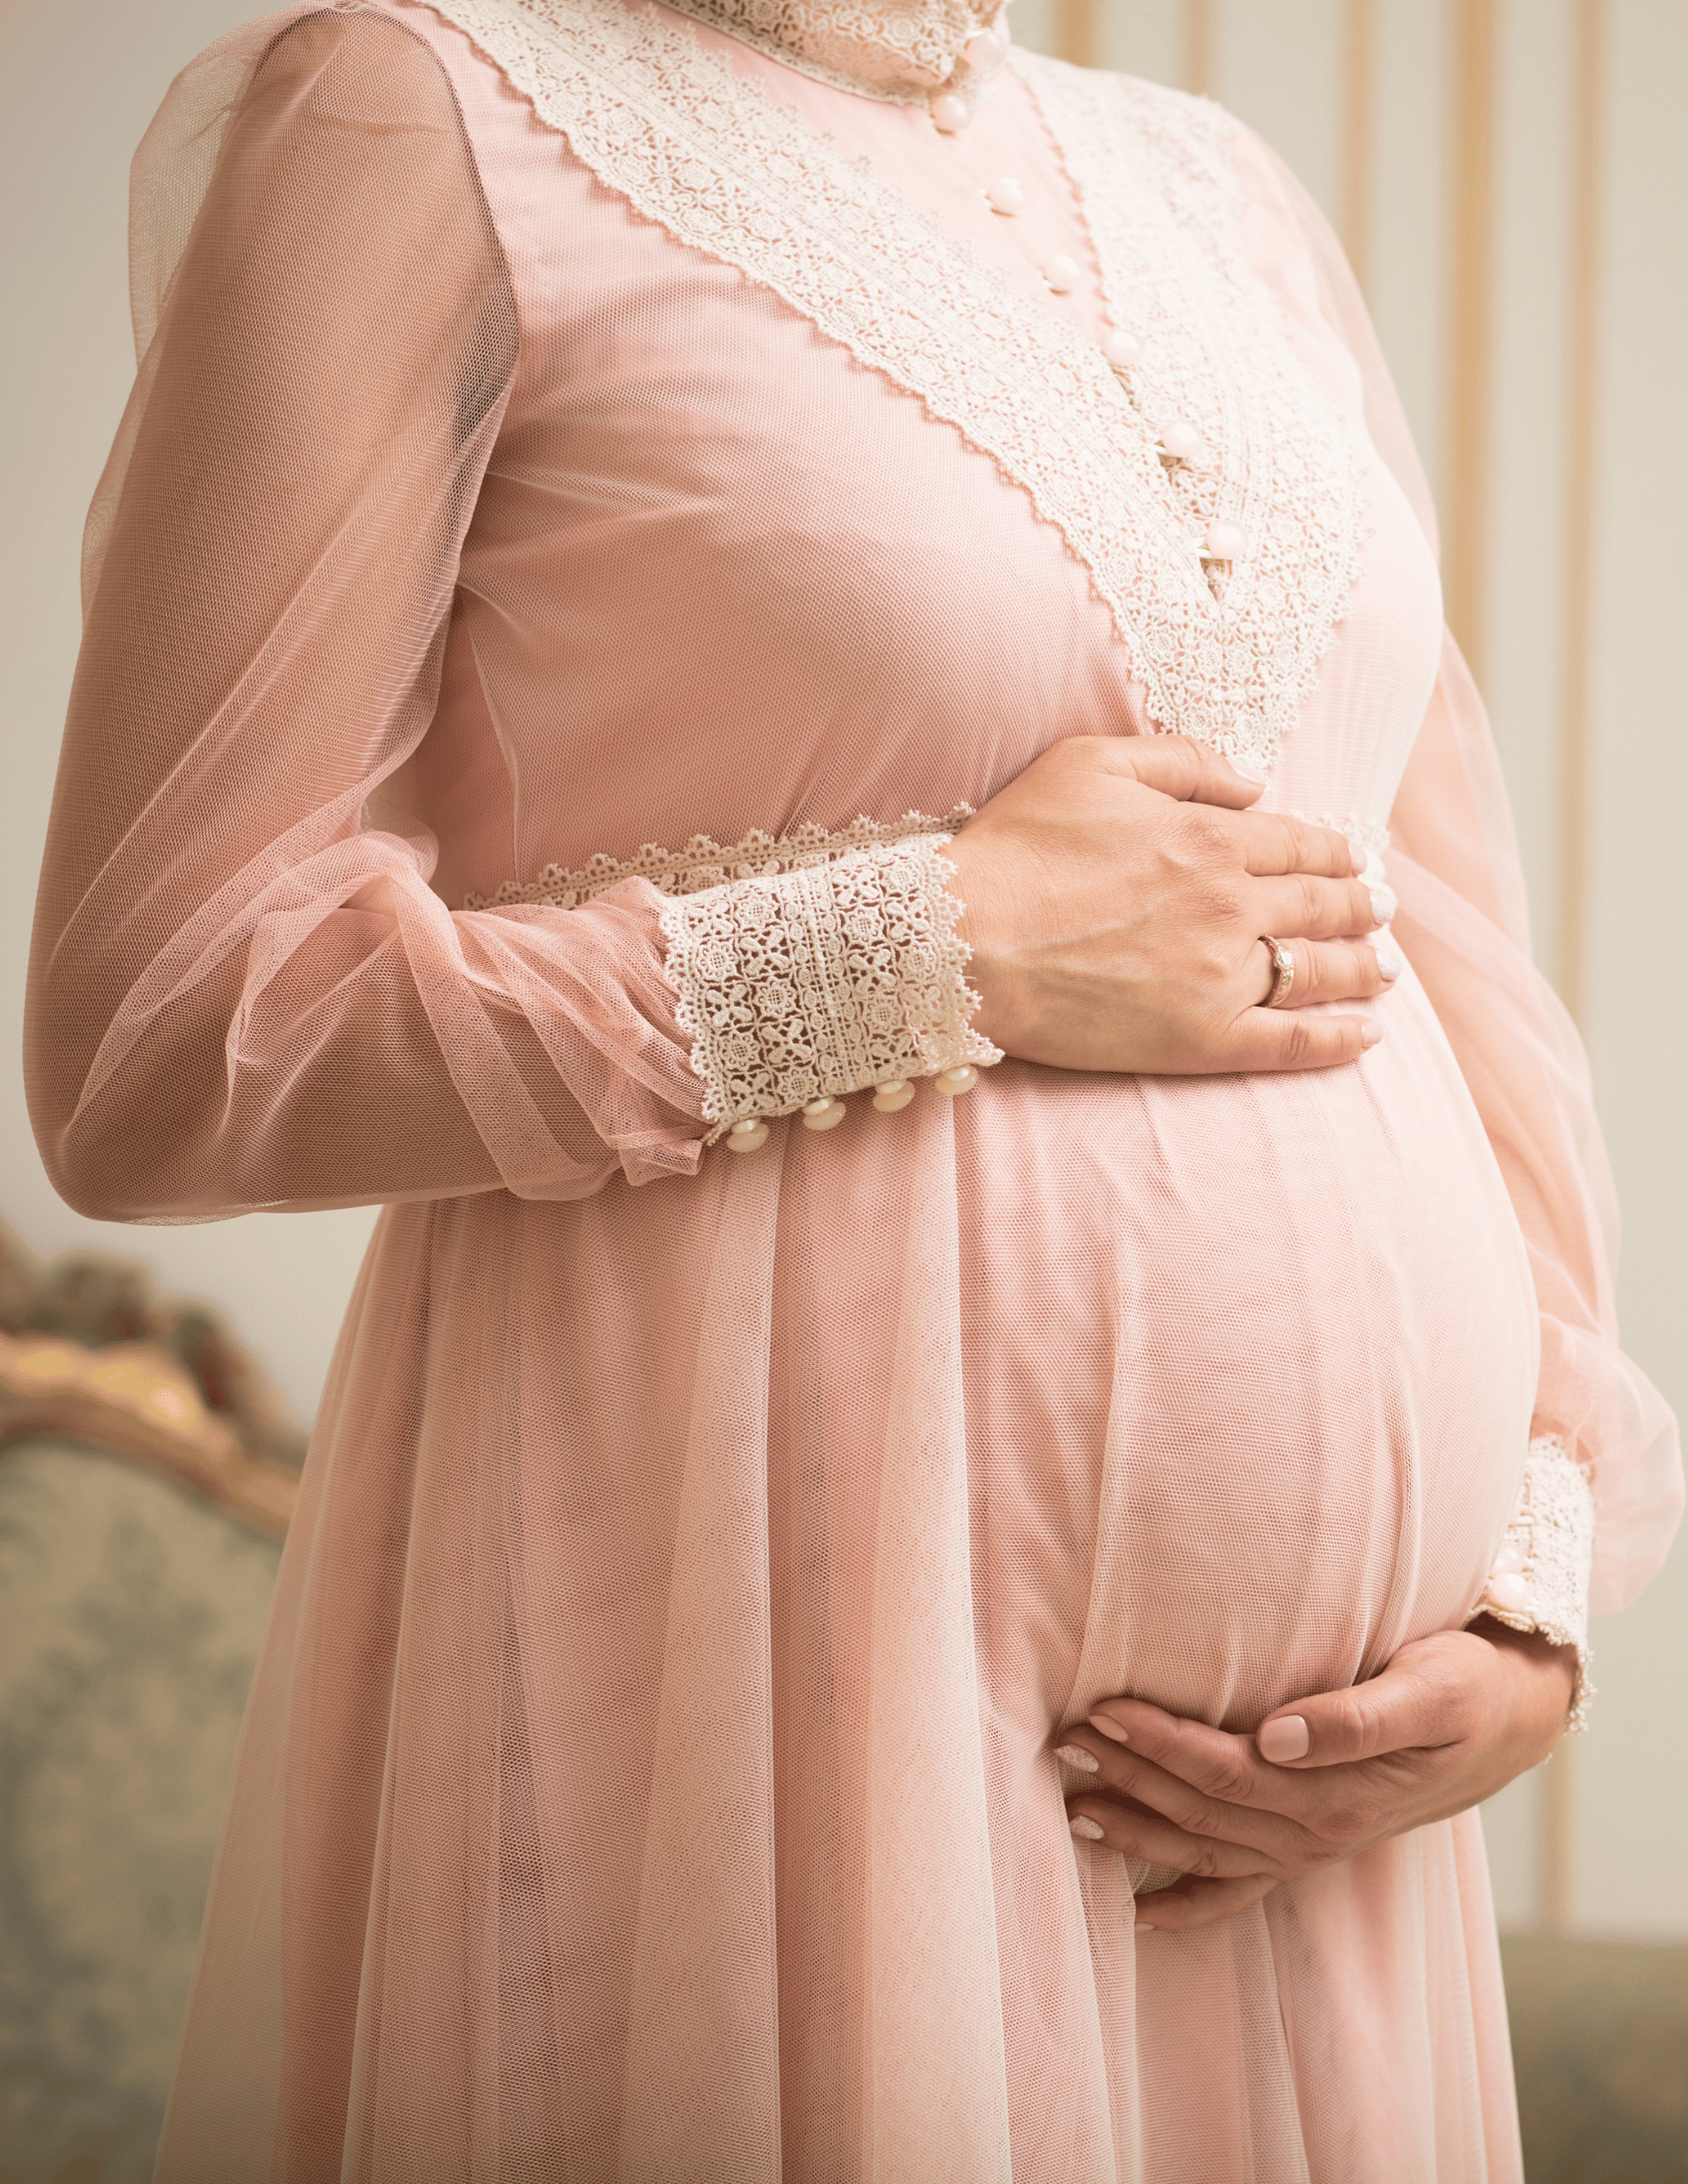 IVF pregnant lady